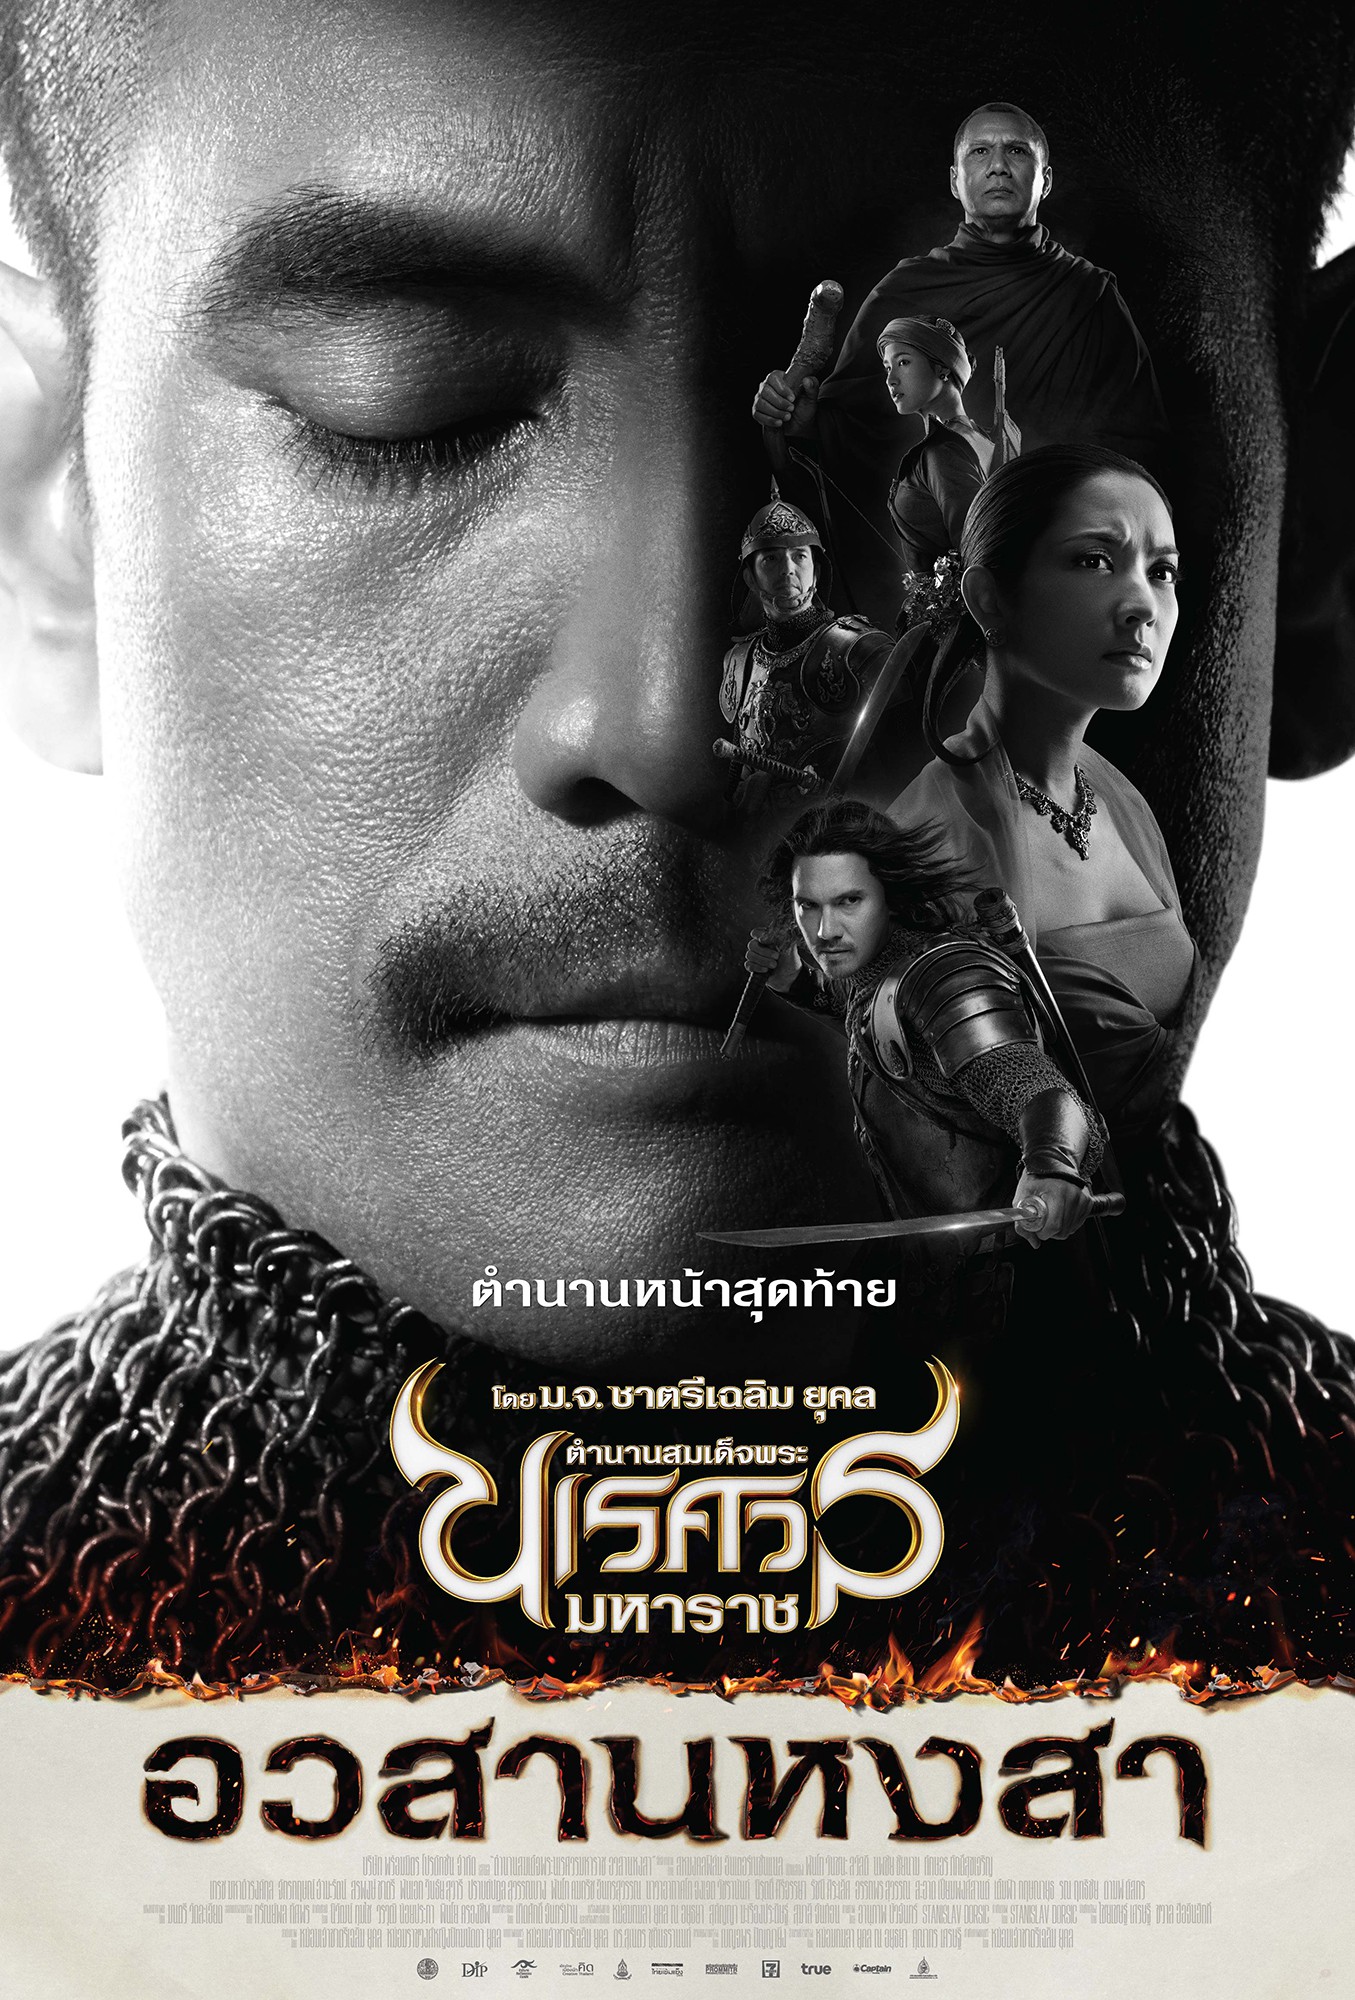 Mega Sized Movie Poster Image for King Naresuan 6 (#1 of 12)